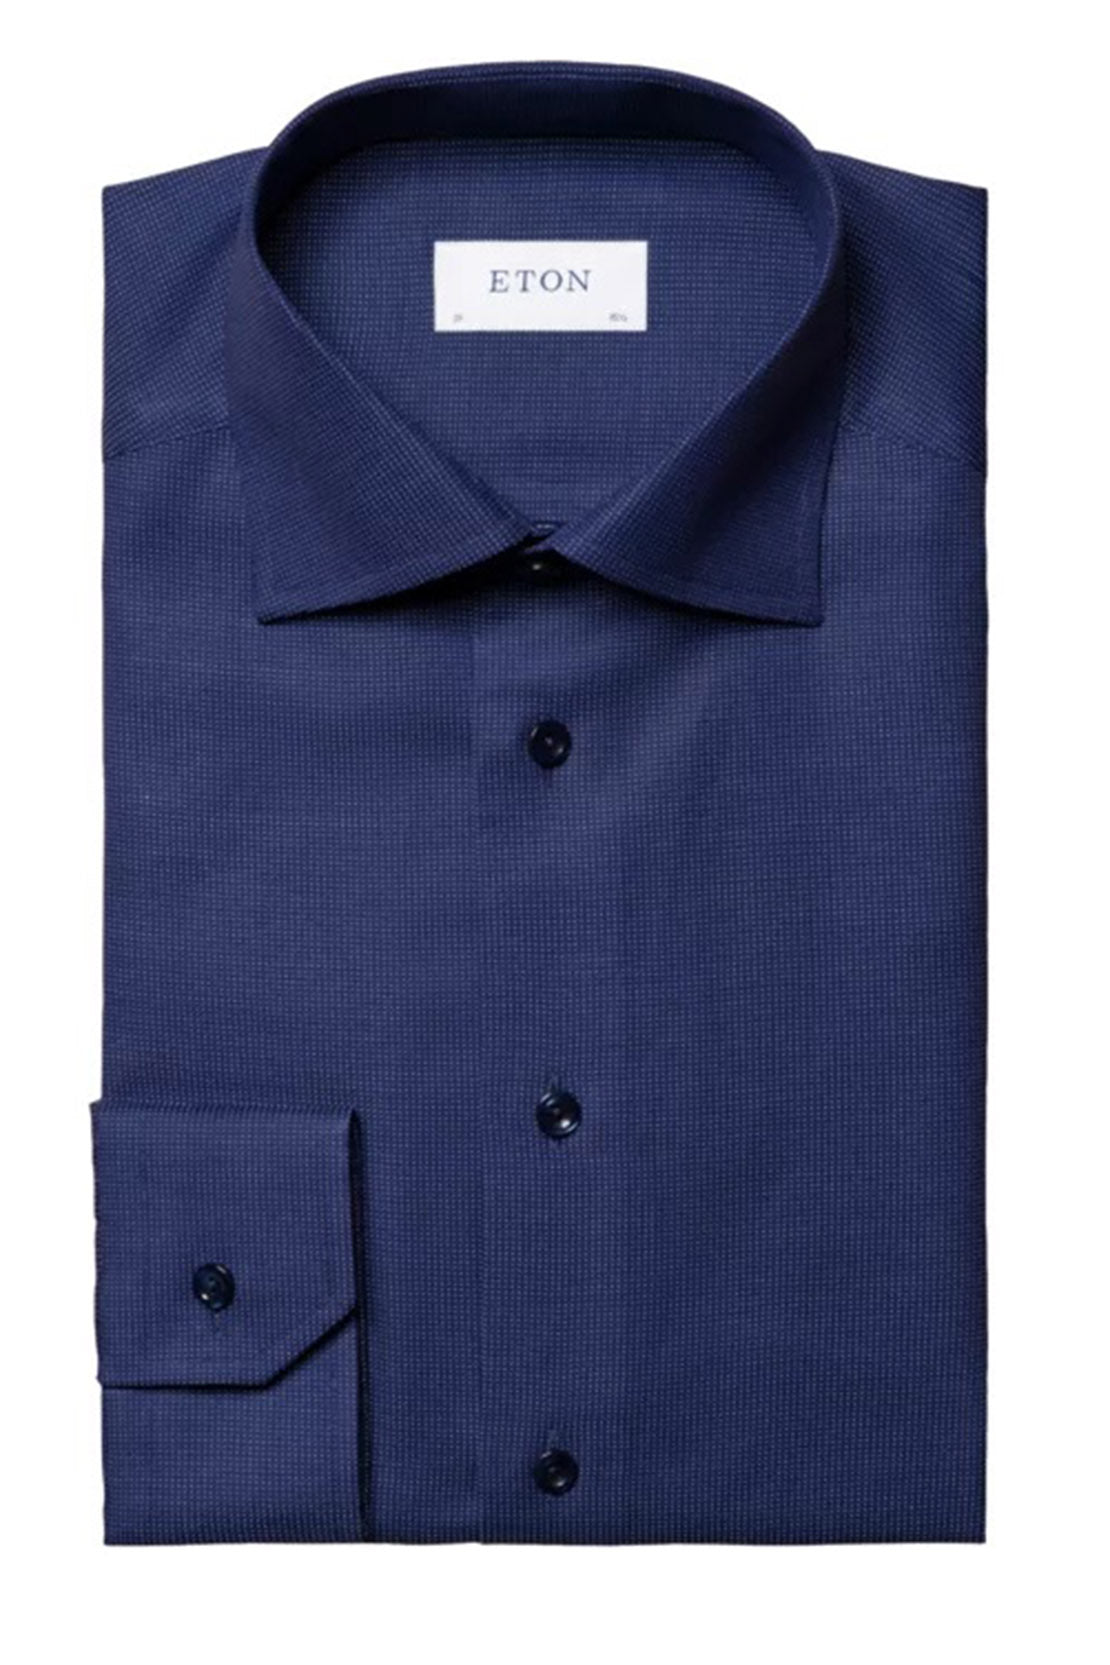 ETON - Dark Blue SLIM FIT Pin-Dot Signature Twill Shirt 10001112727